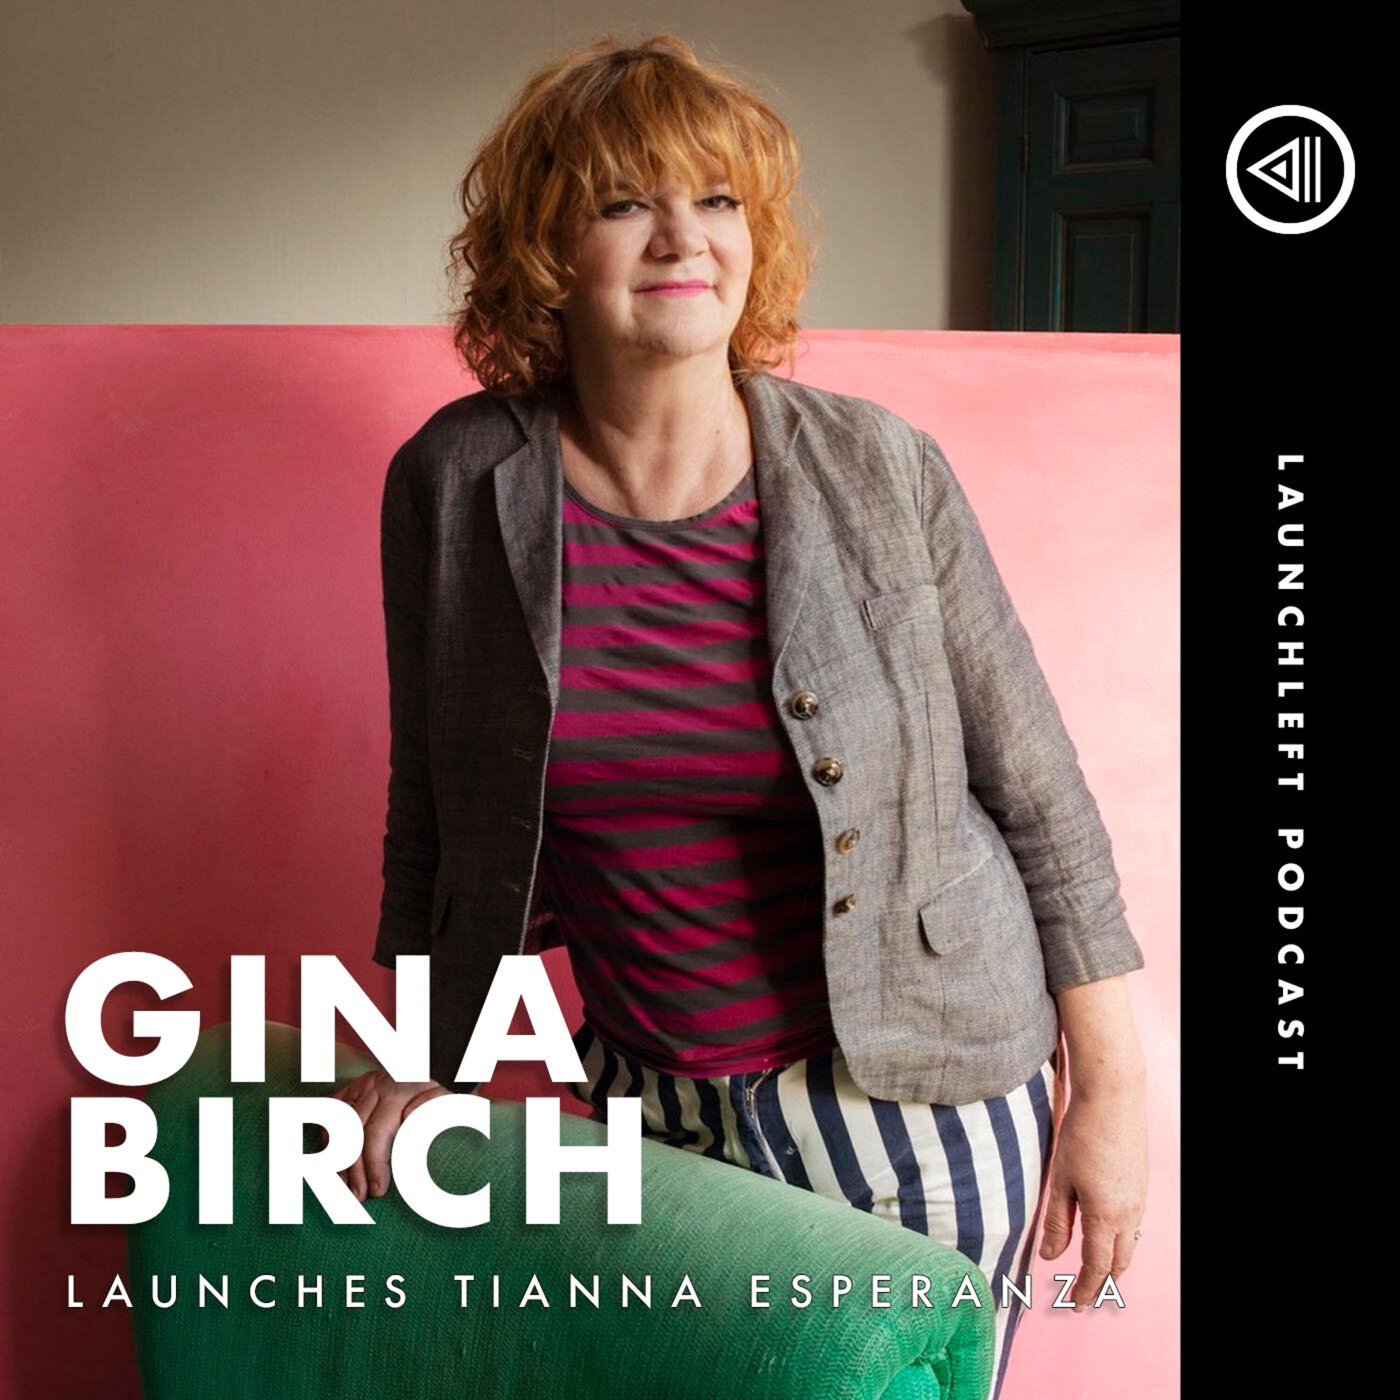 GINA BIRCH launches Tianna Esperanza